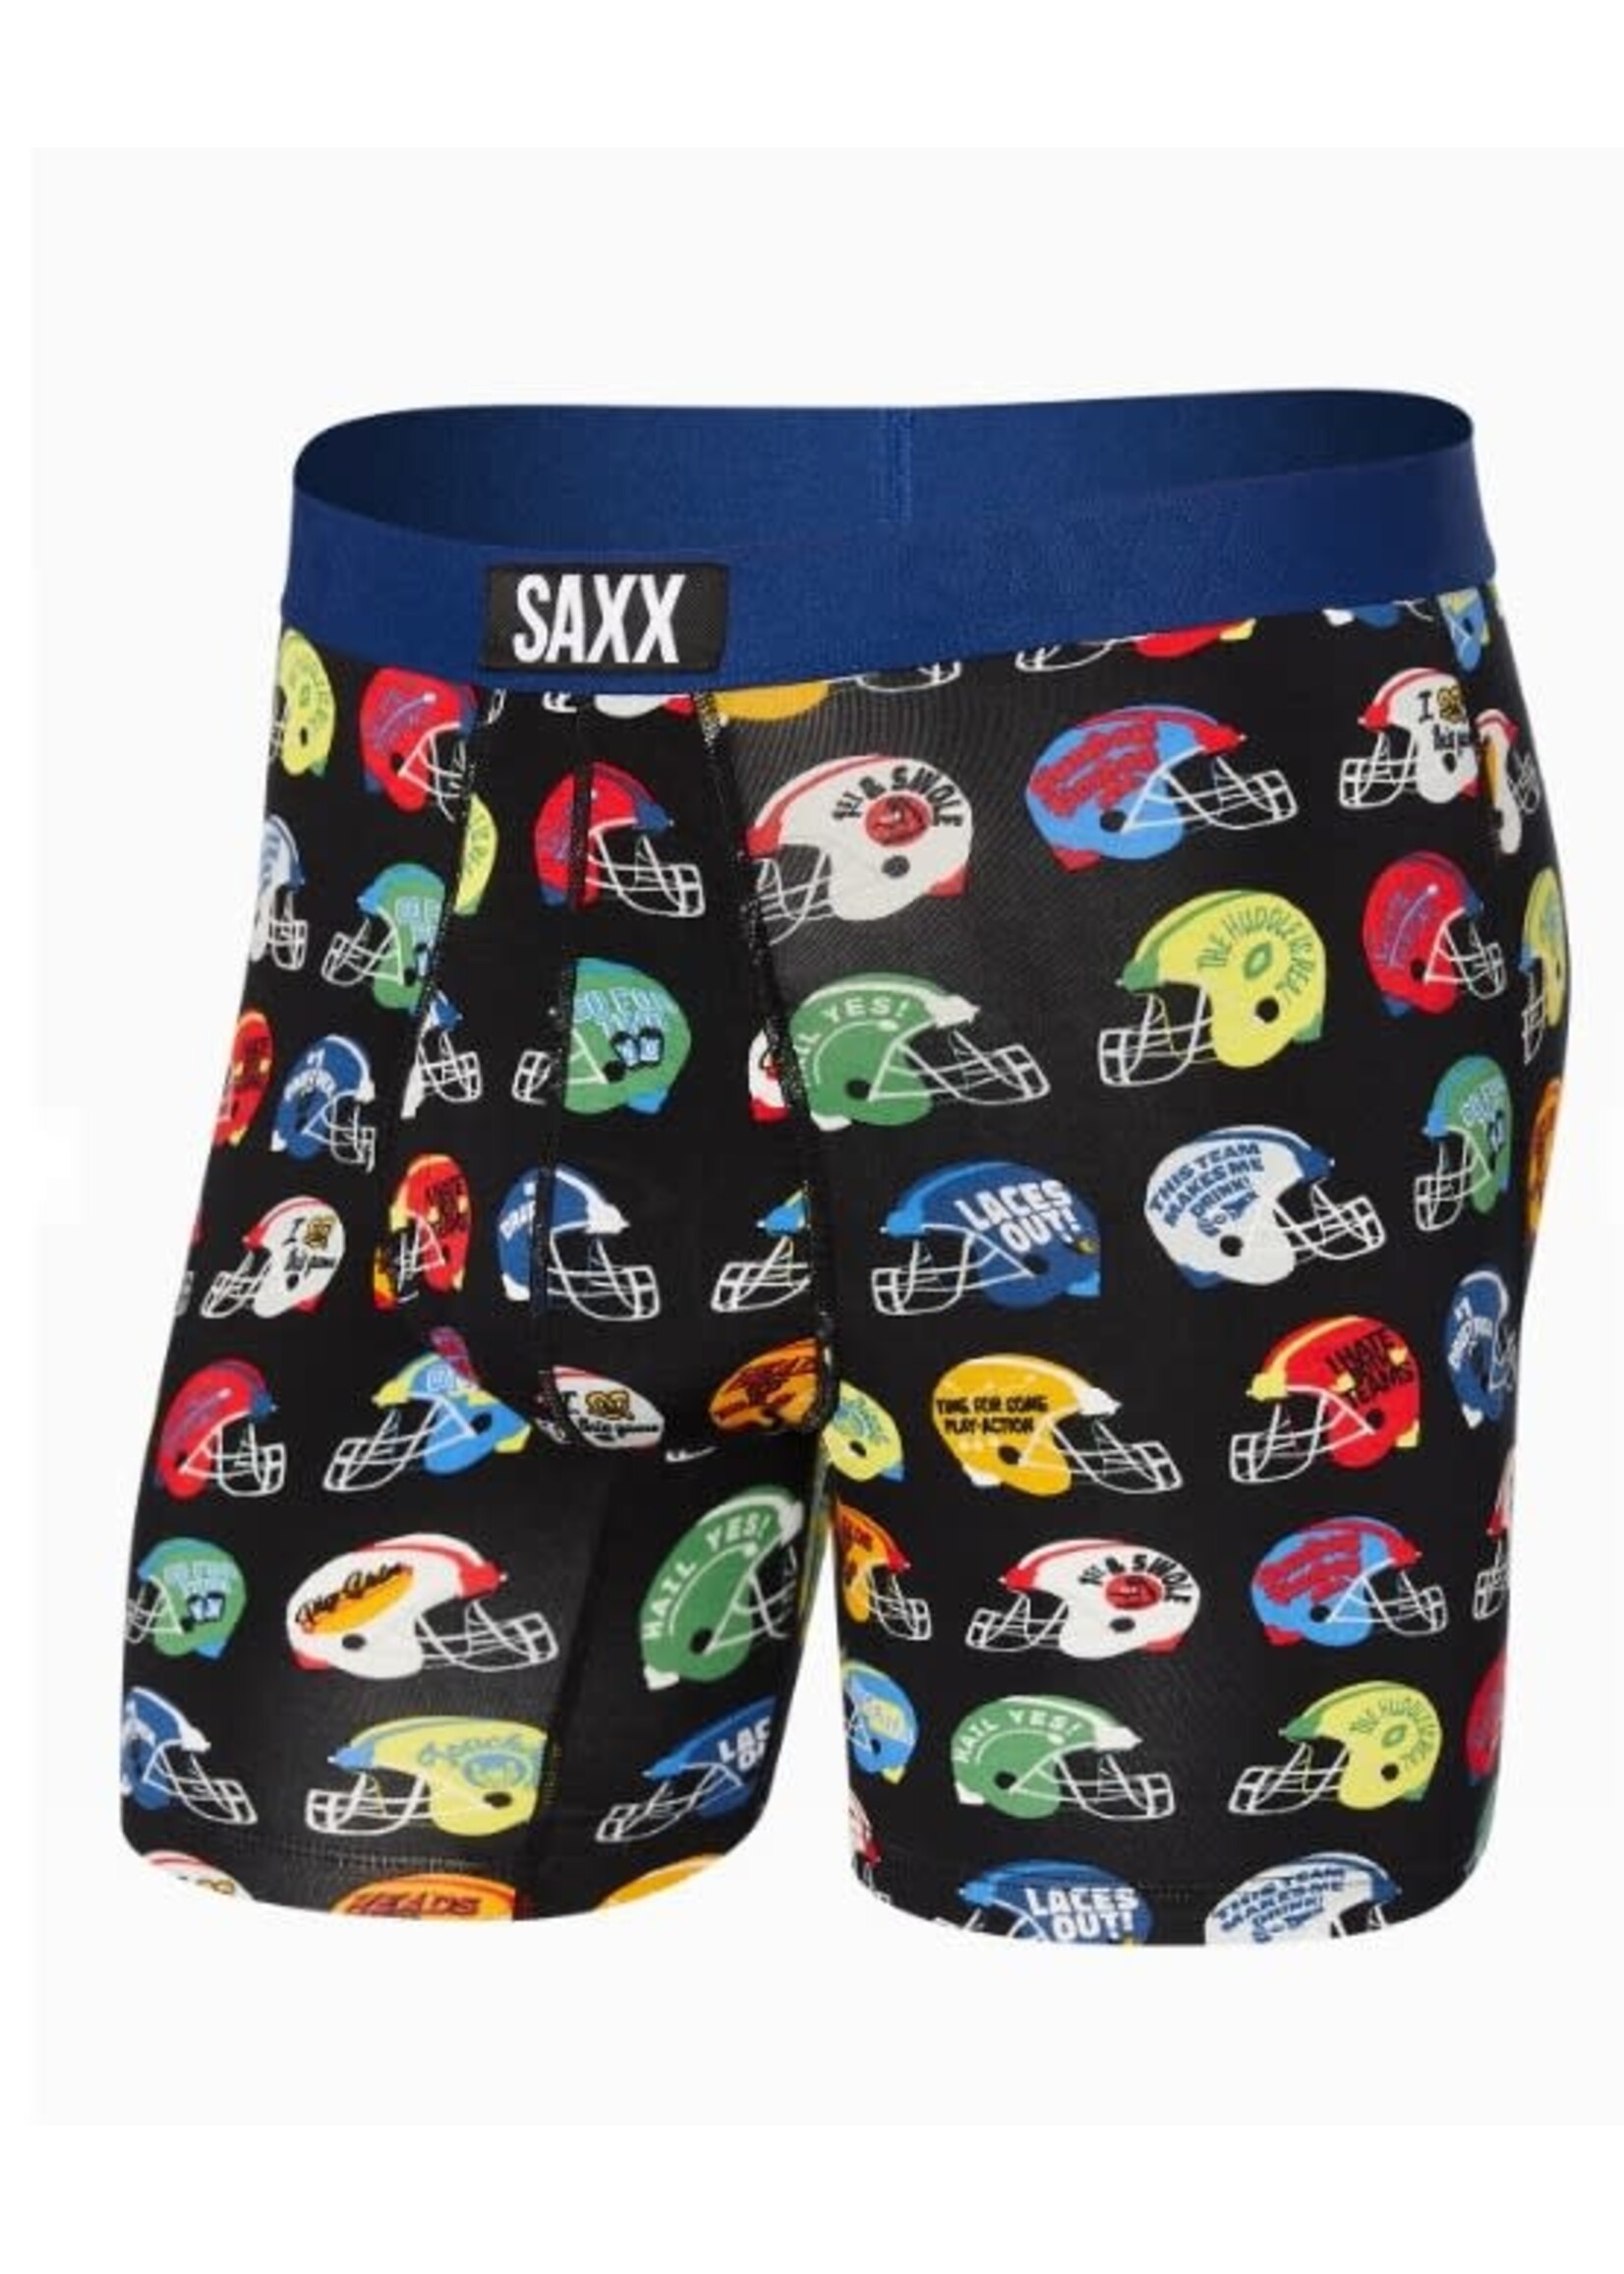 SAXX Saxx Ultra Super Soft